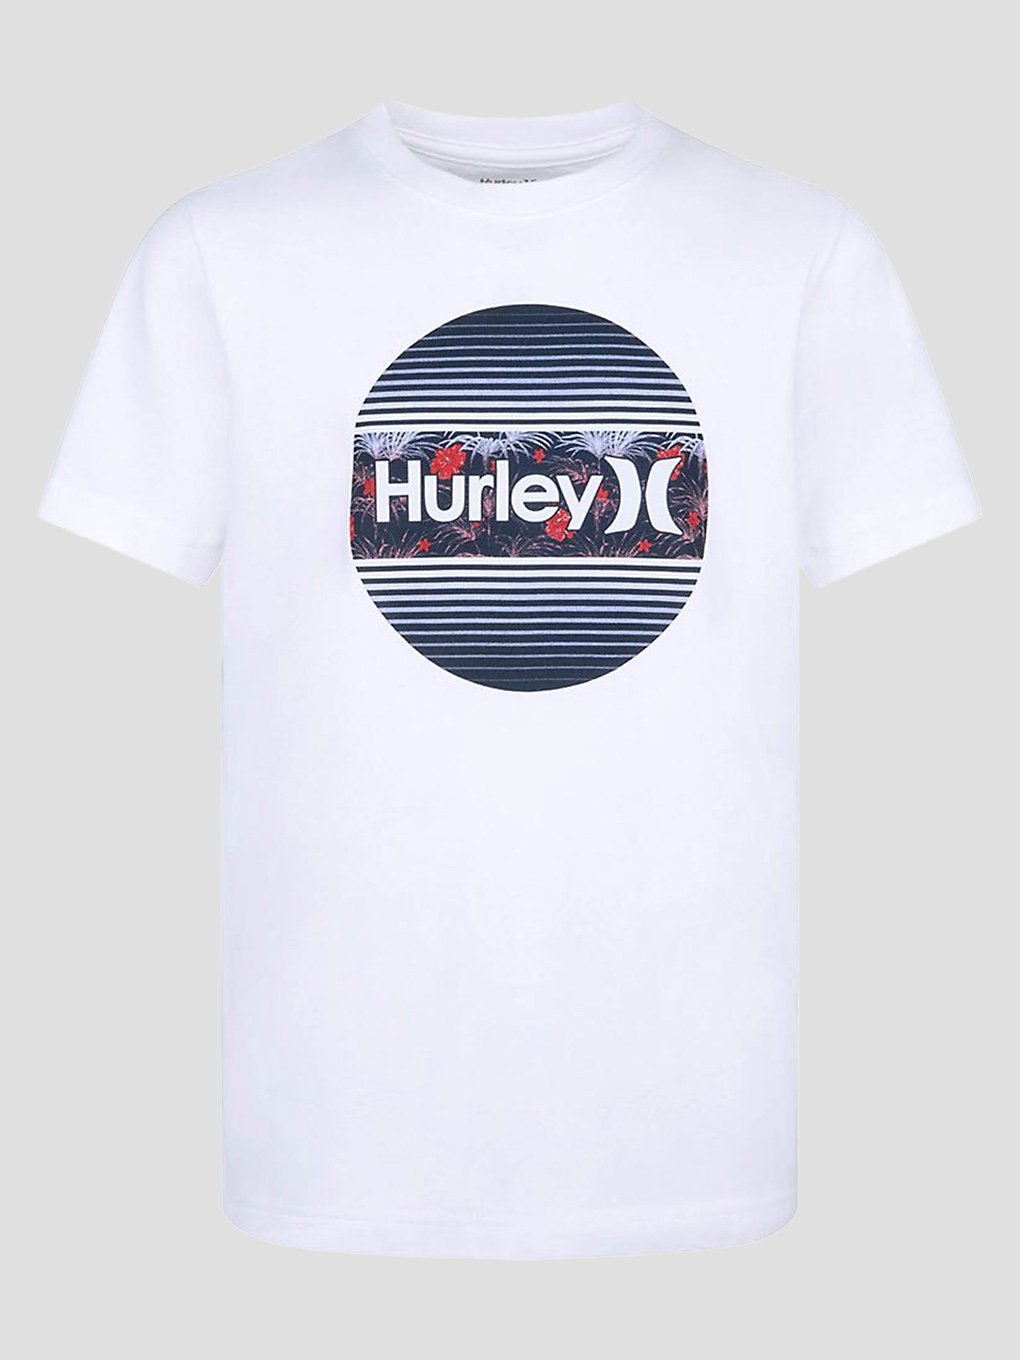 Hurley Americana Floral T-Shirt wht kaufen